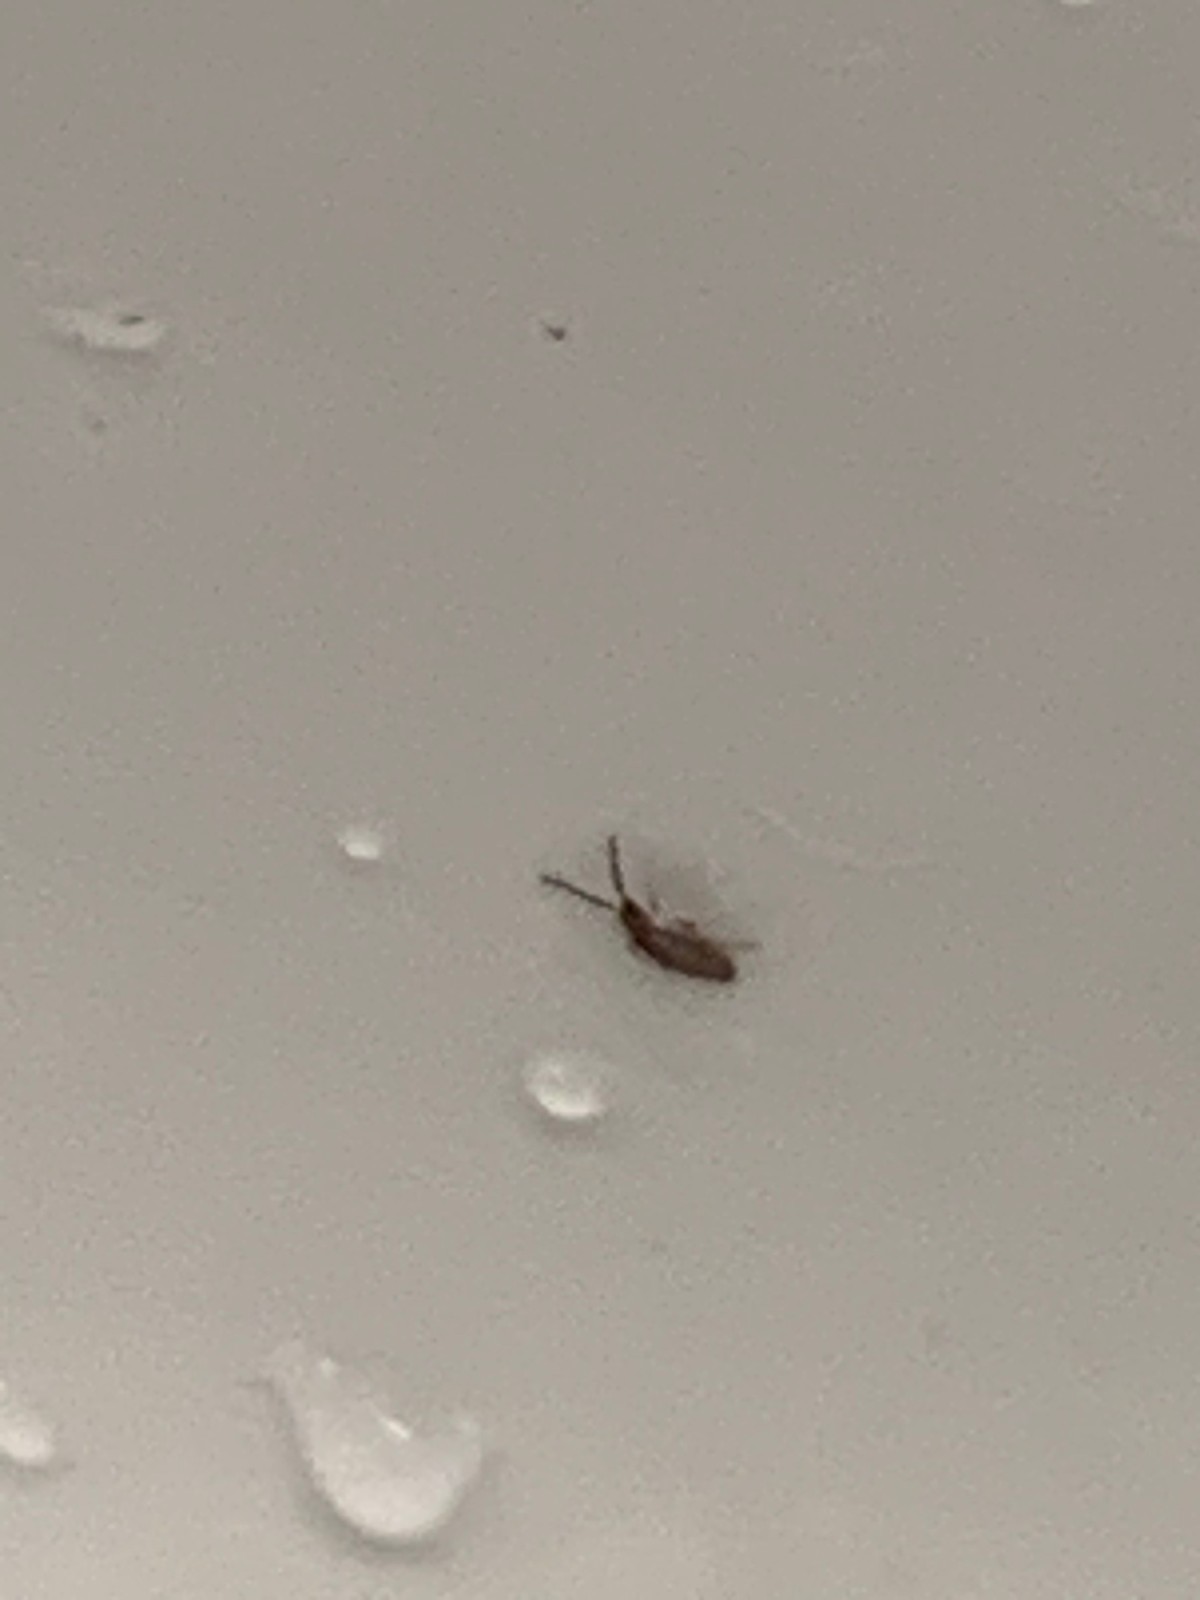 Tiny Bugs On Bathroom Floor